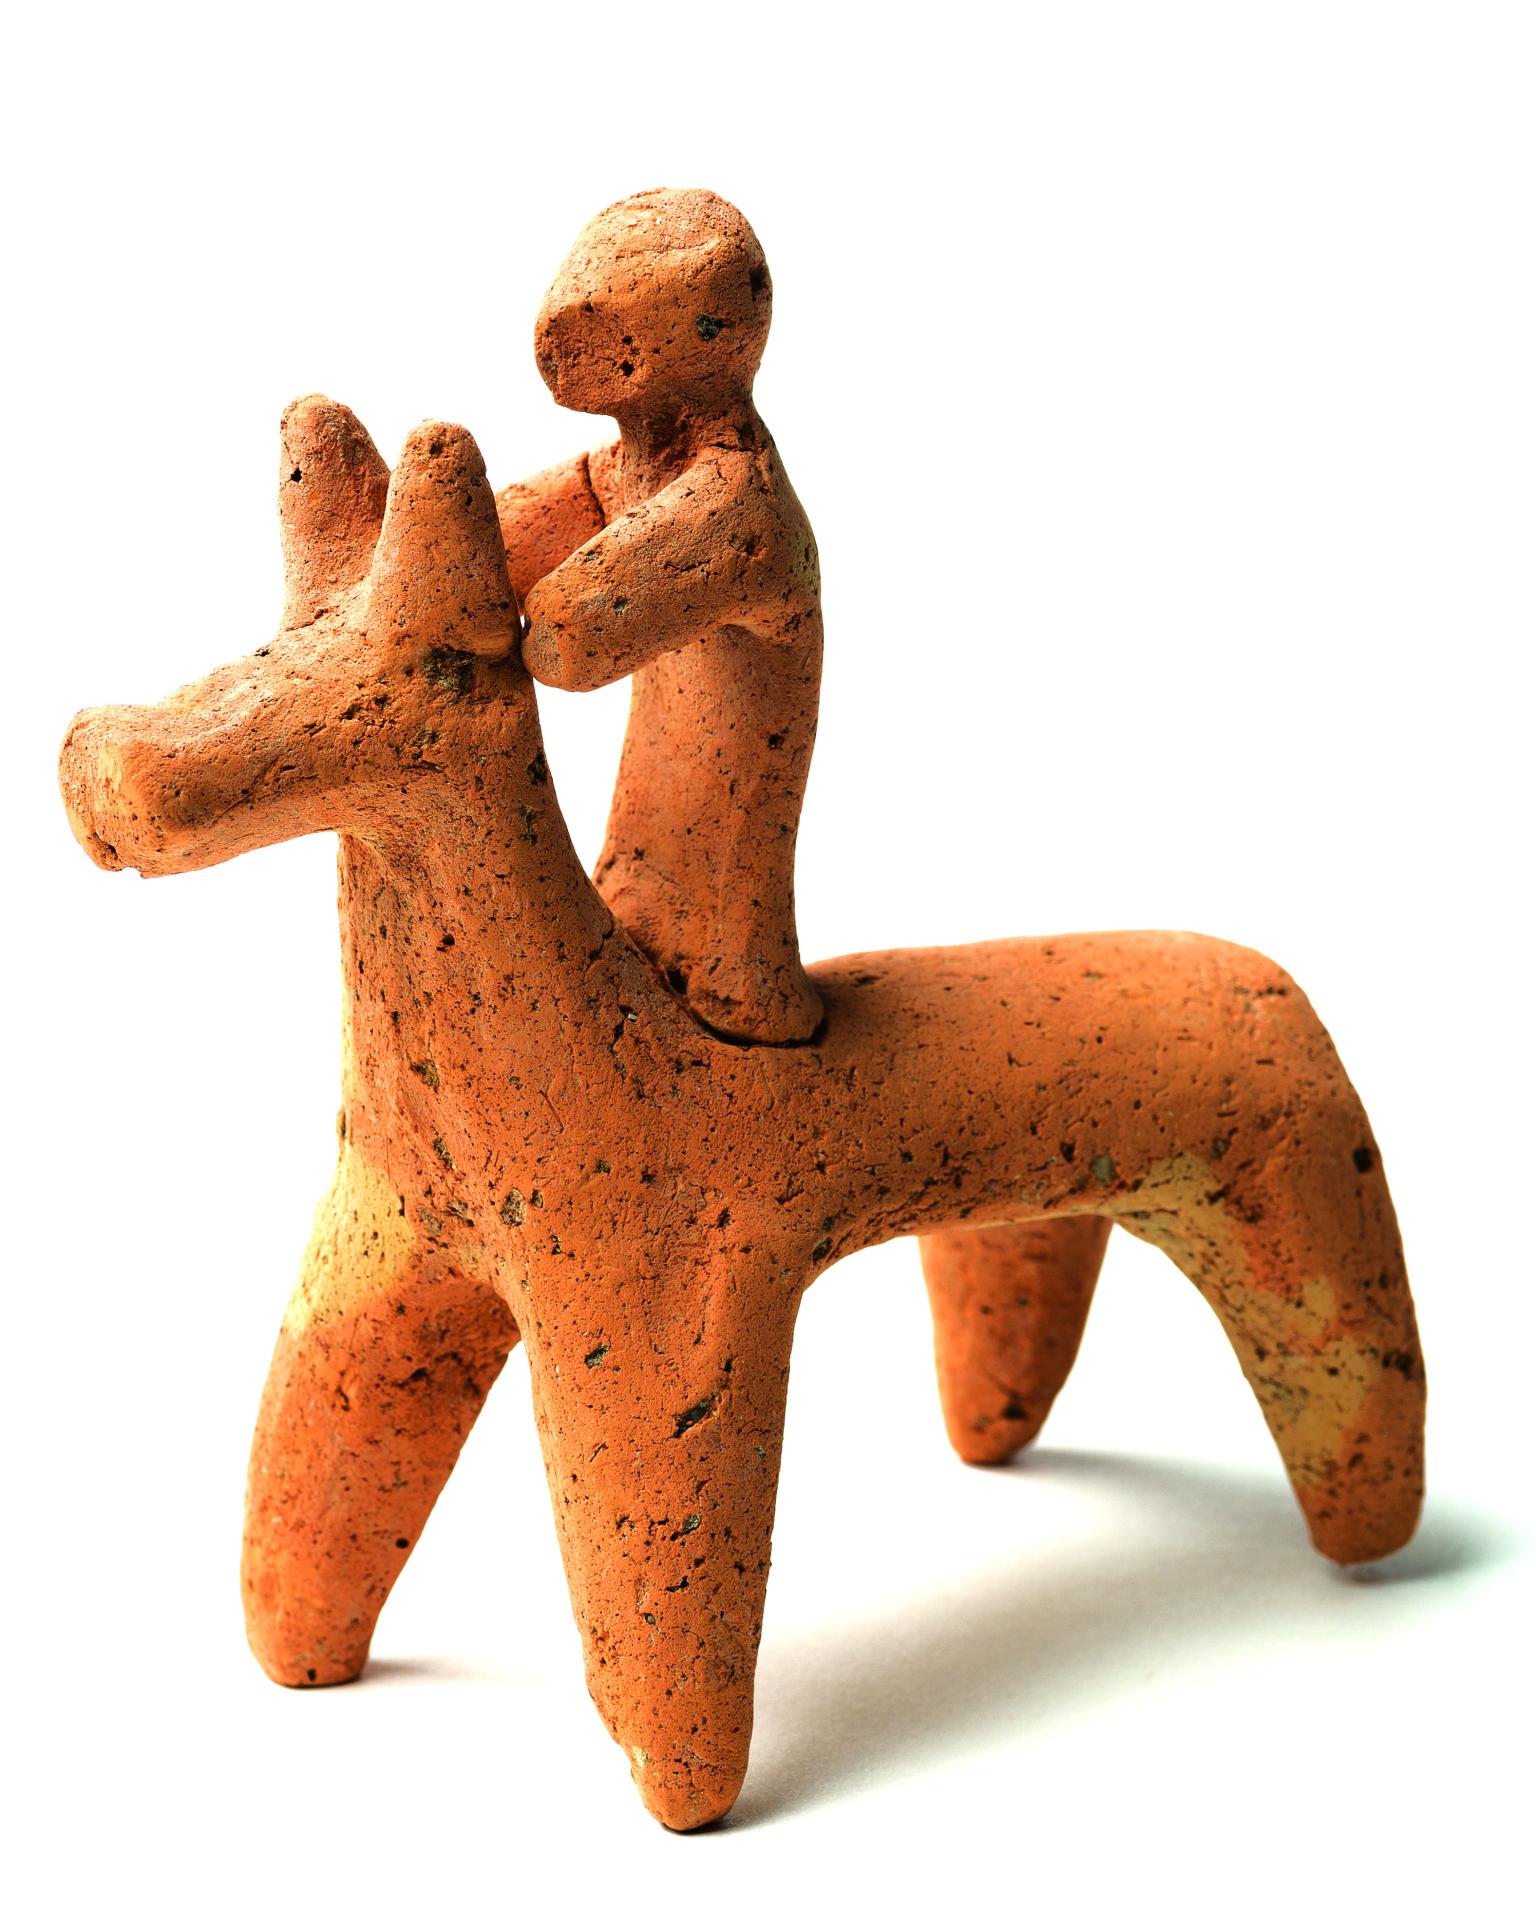 Terra-cotta figurine of horse and rider.